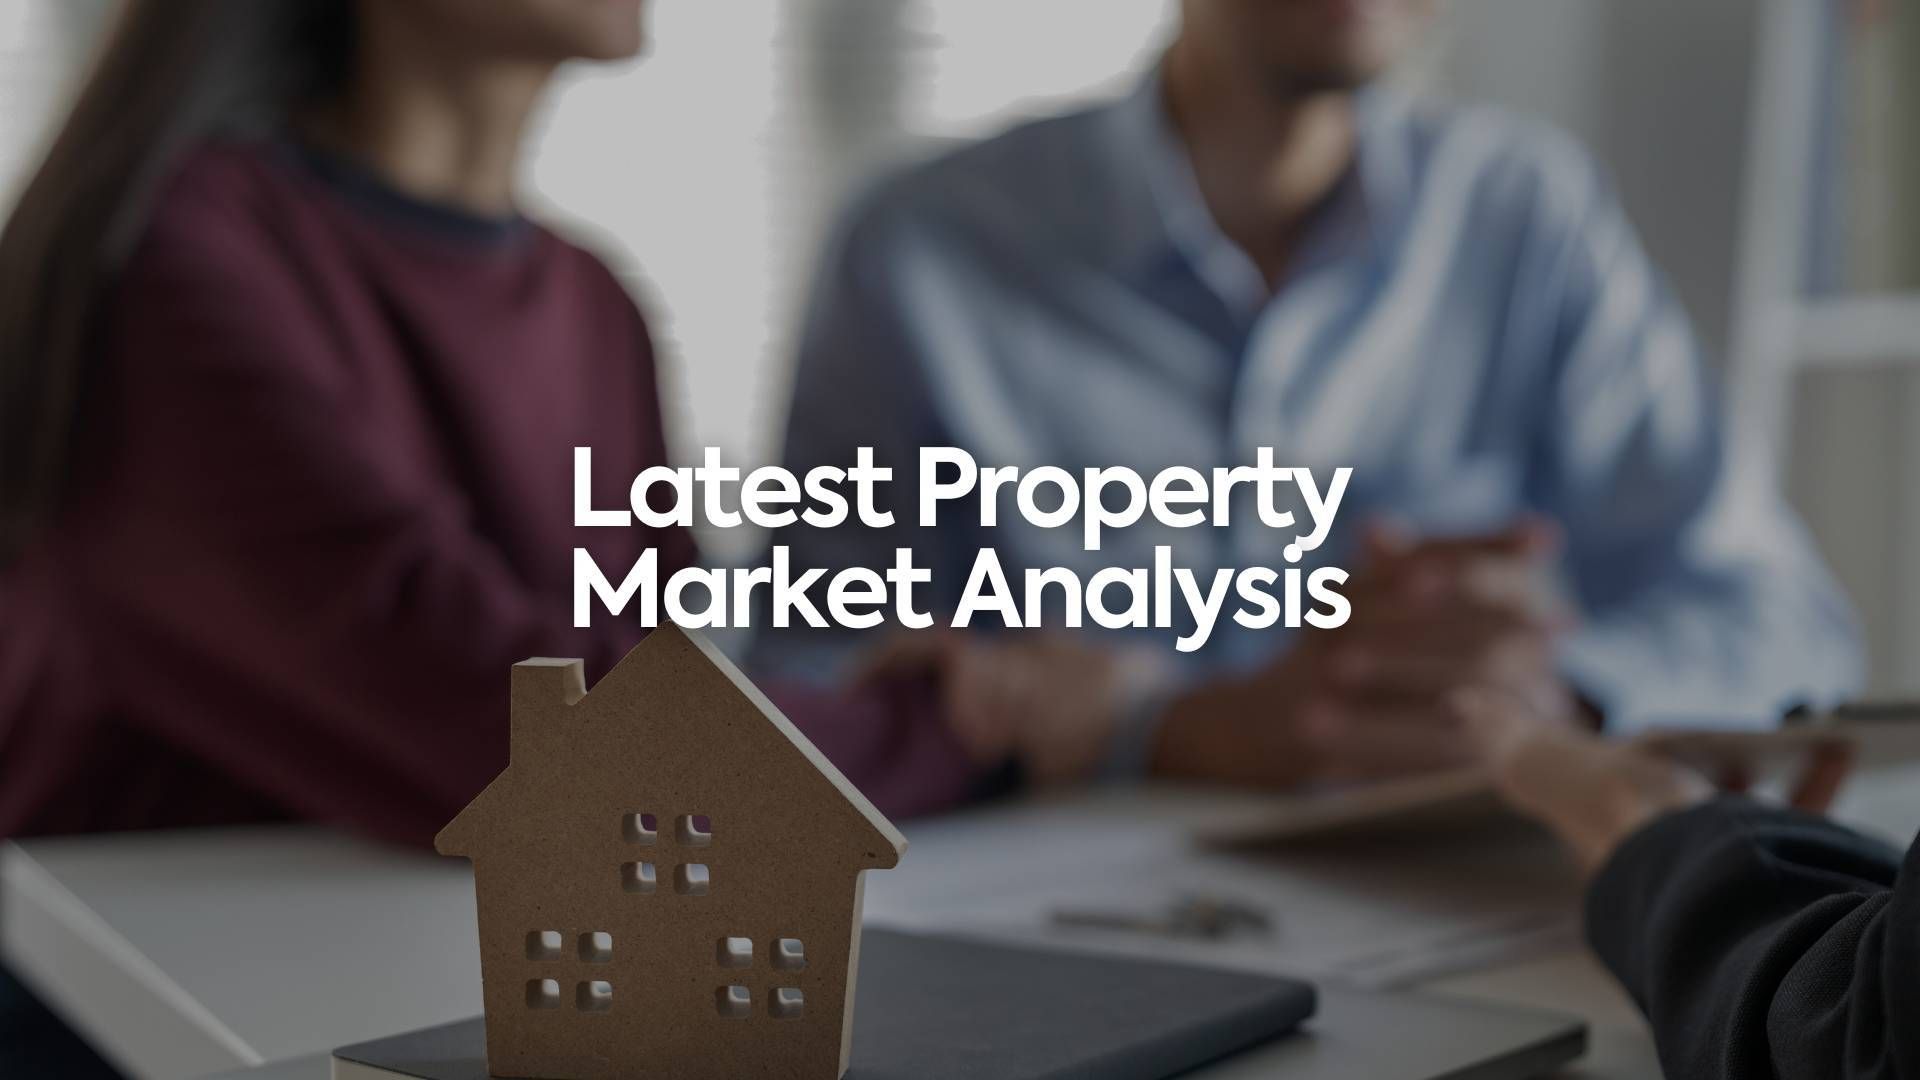 June Property Market Analysis